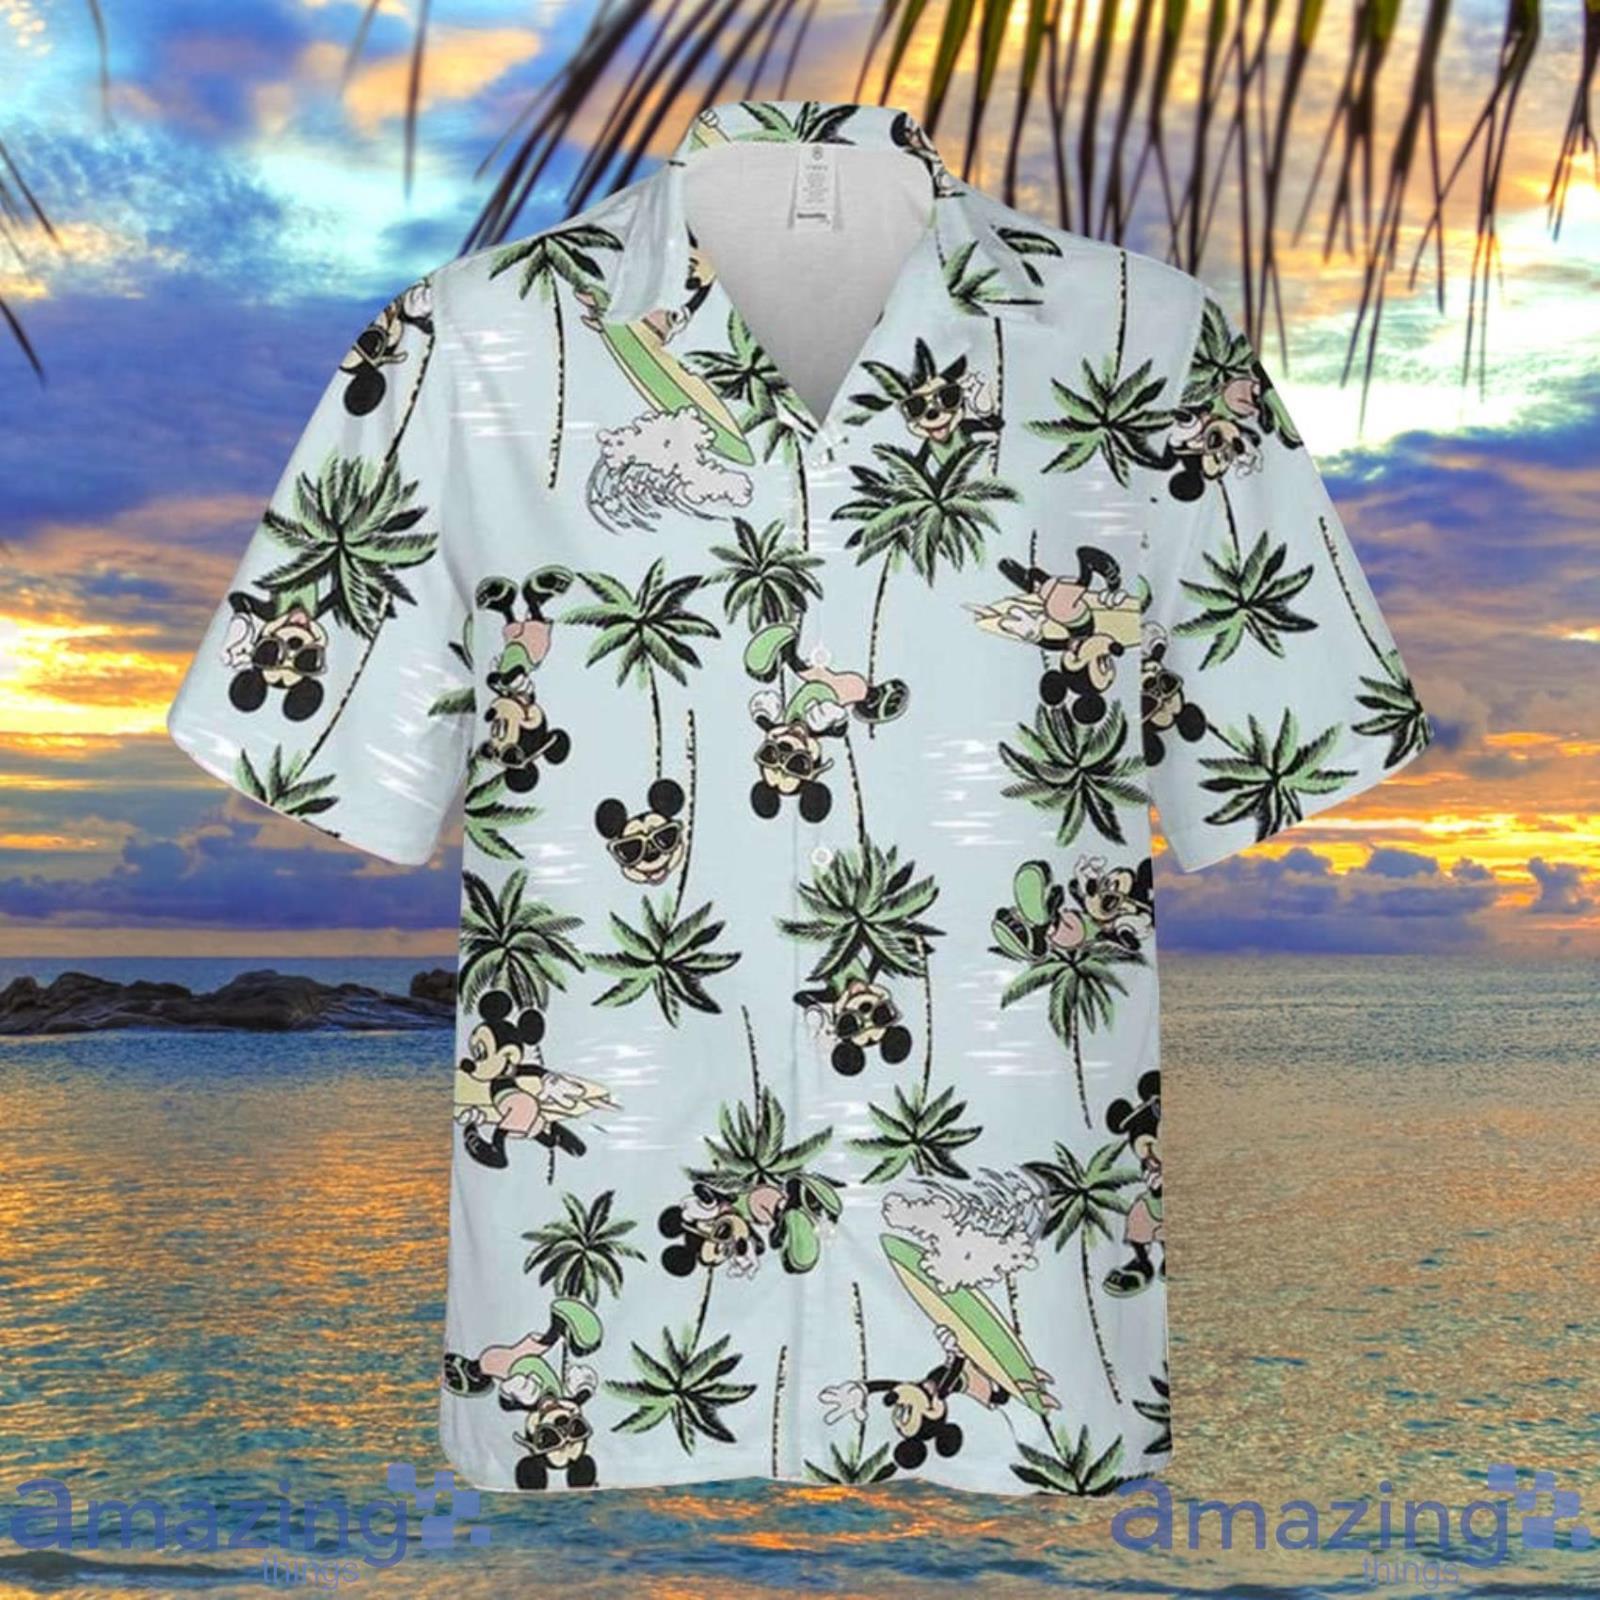 Disney Mickey Mouse Hawaiian Summer Shirt, Gifts For Men And Women